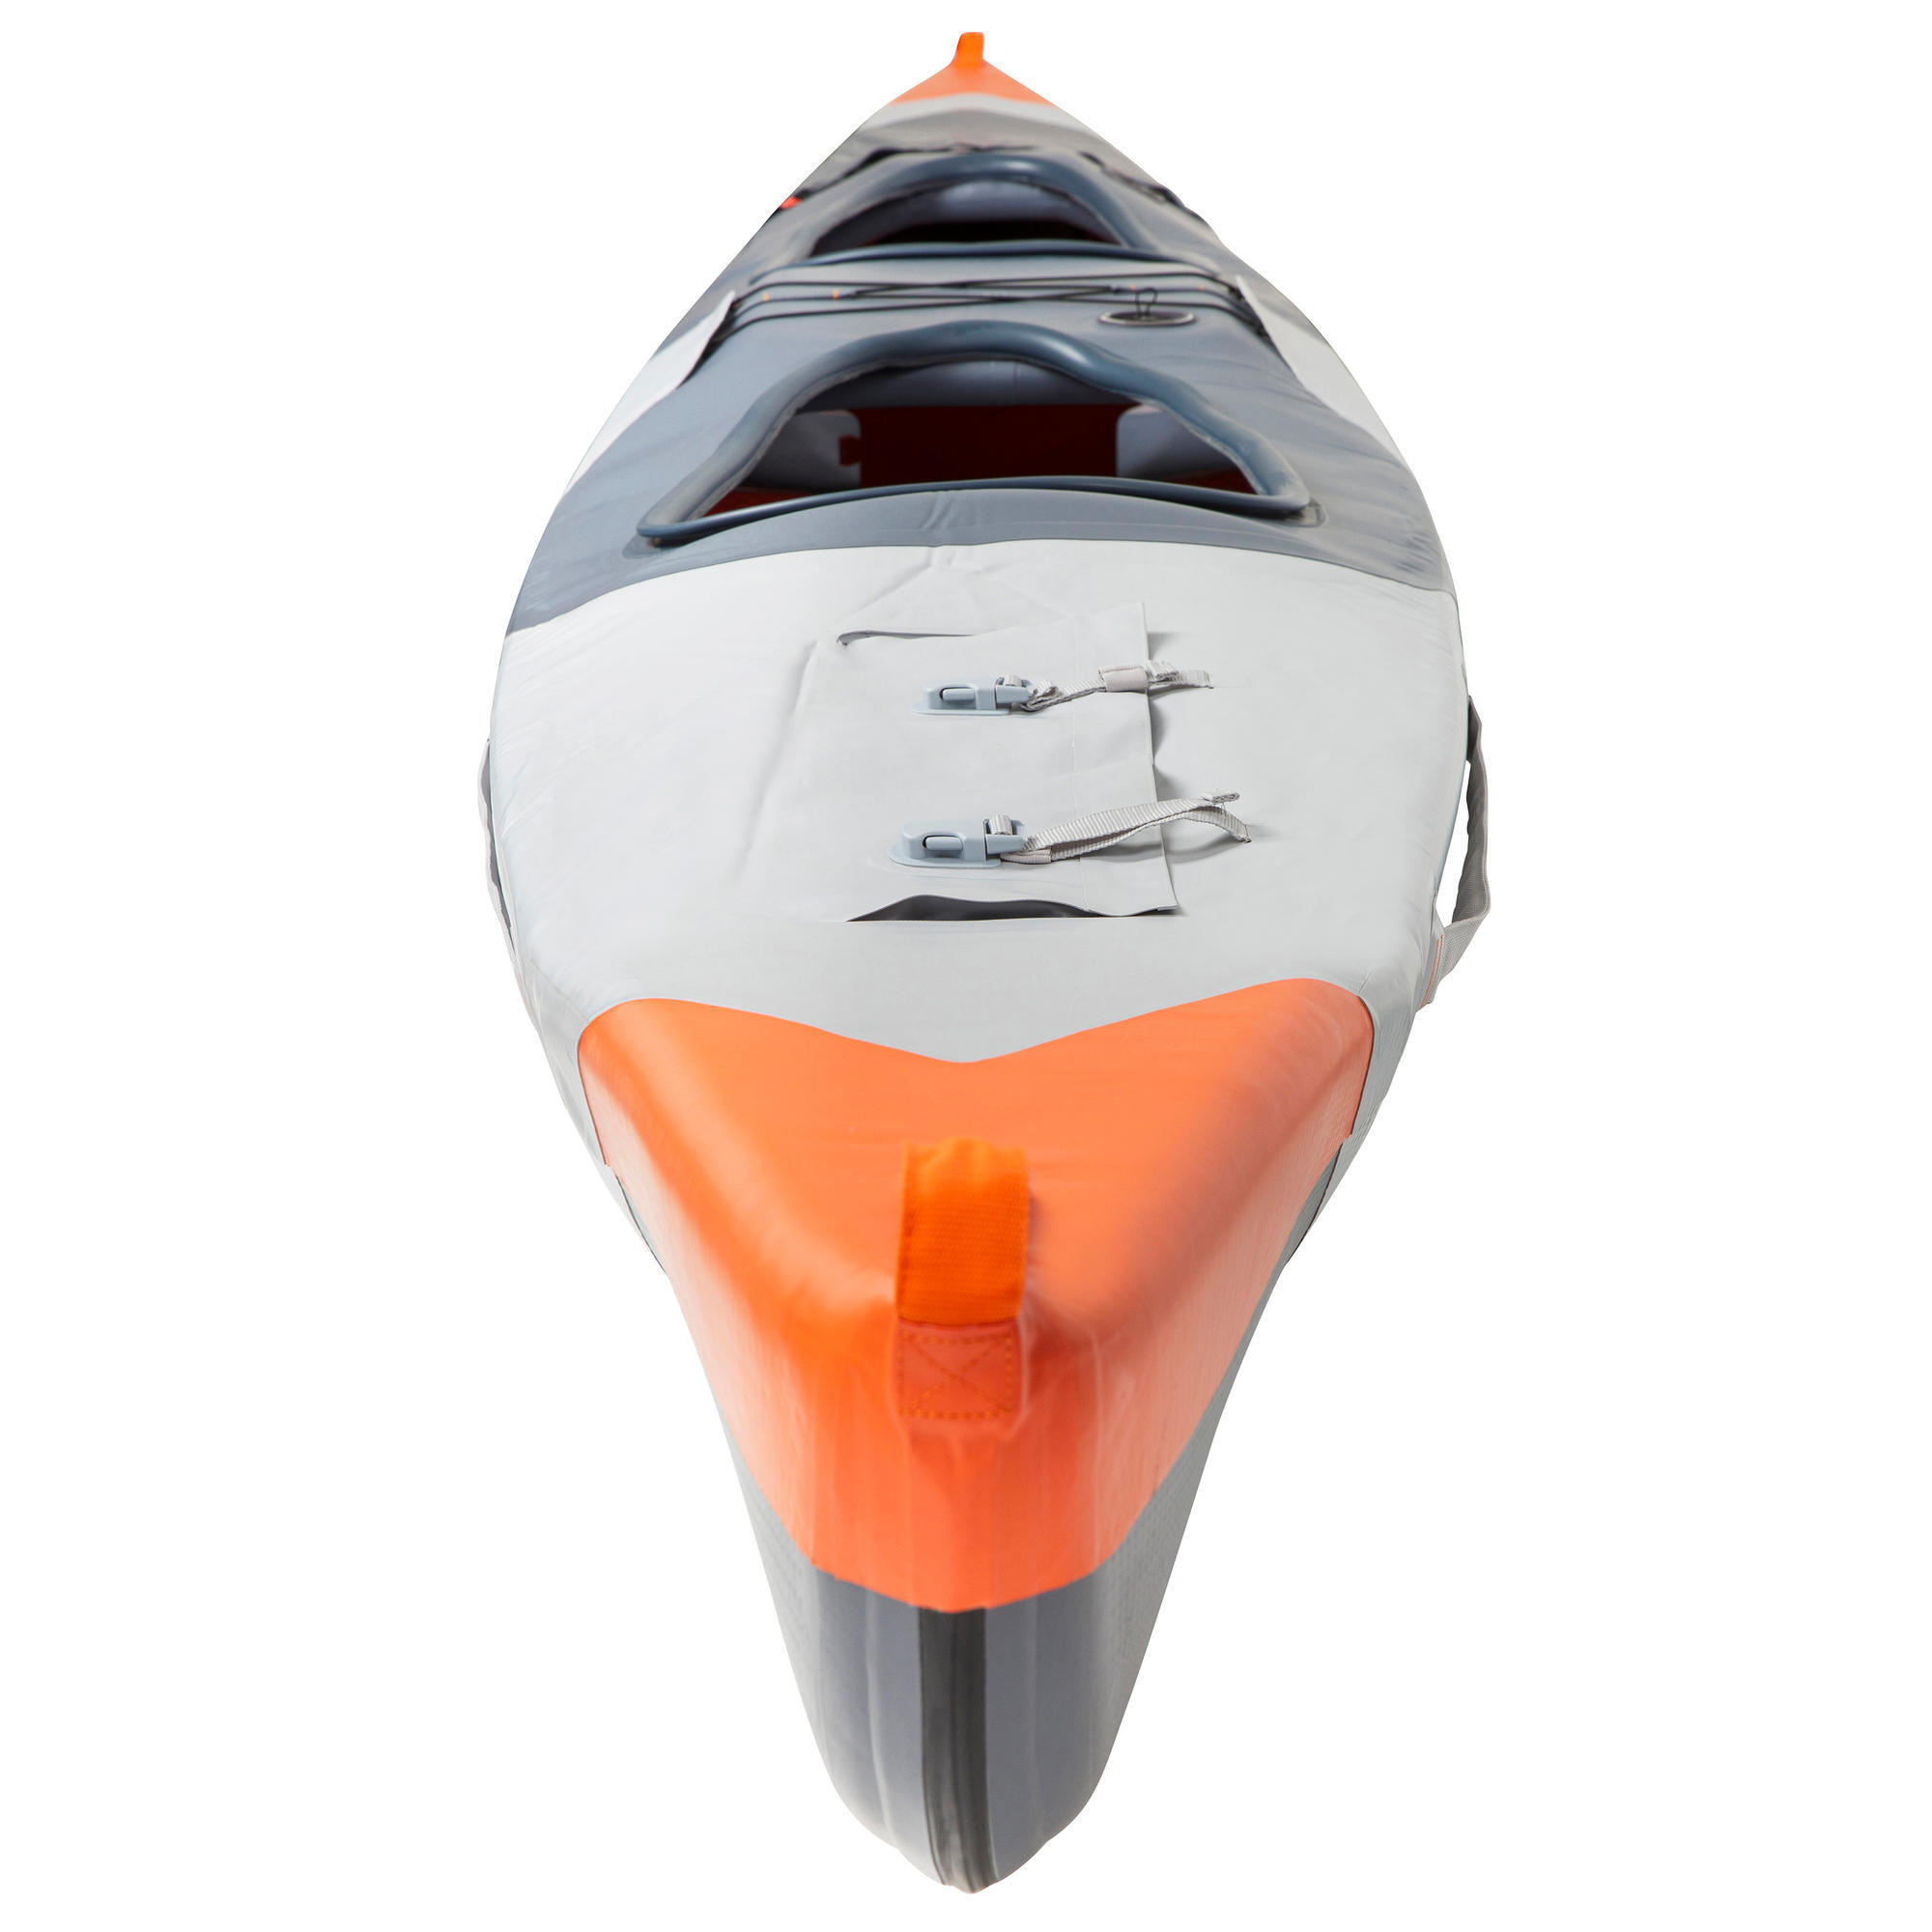 Mejor kayak hinchable del mercado: Itiwit Strenfit X500